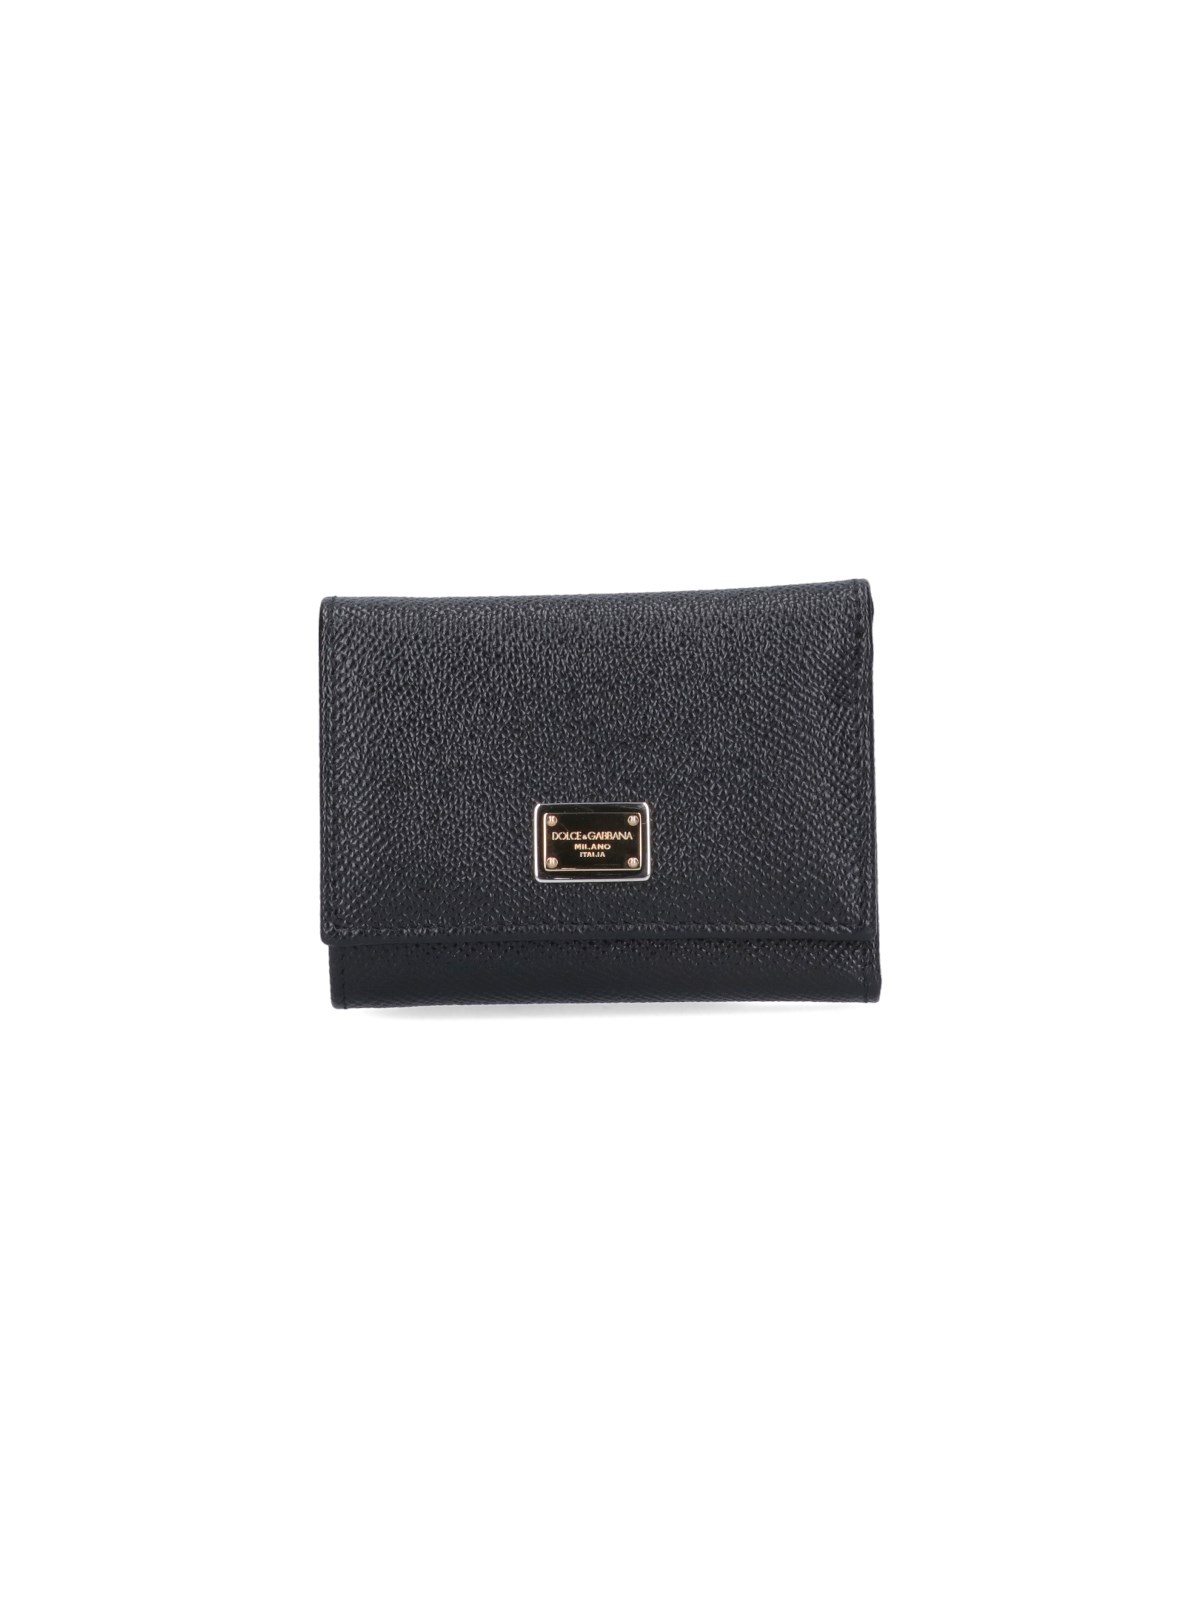 Dolce & Gabbana Logo Compact Wallet In Black  